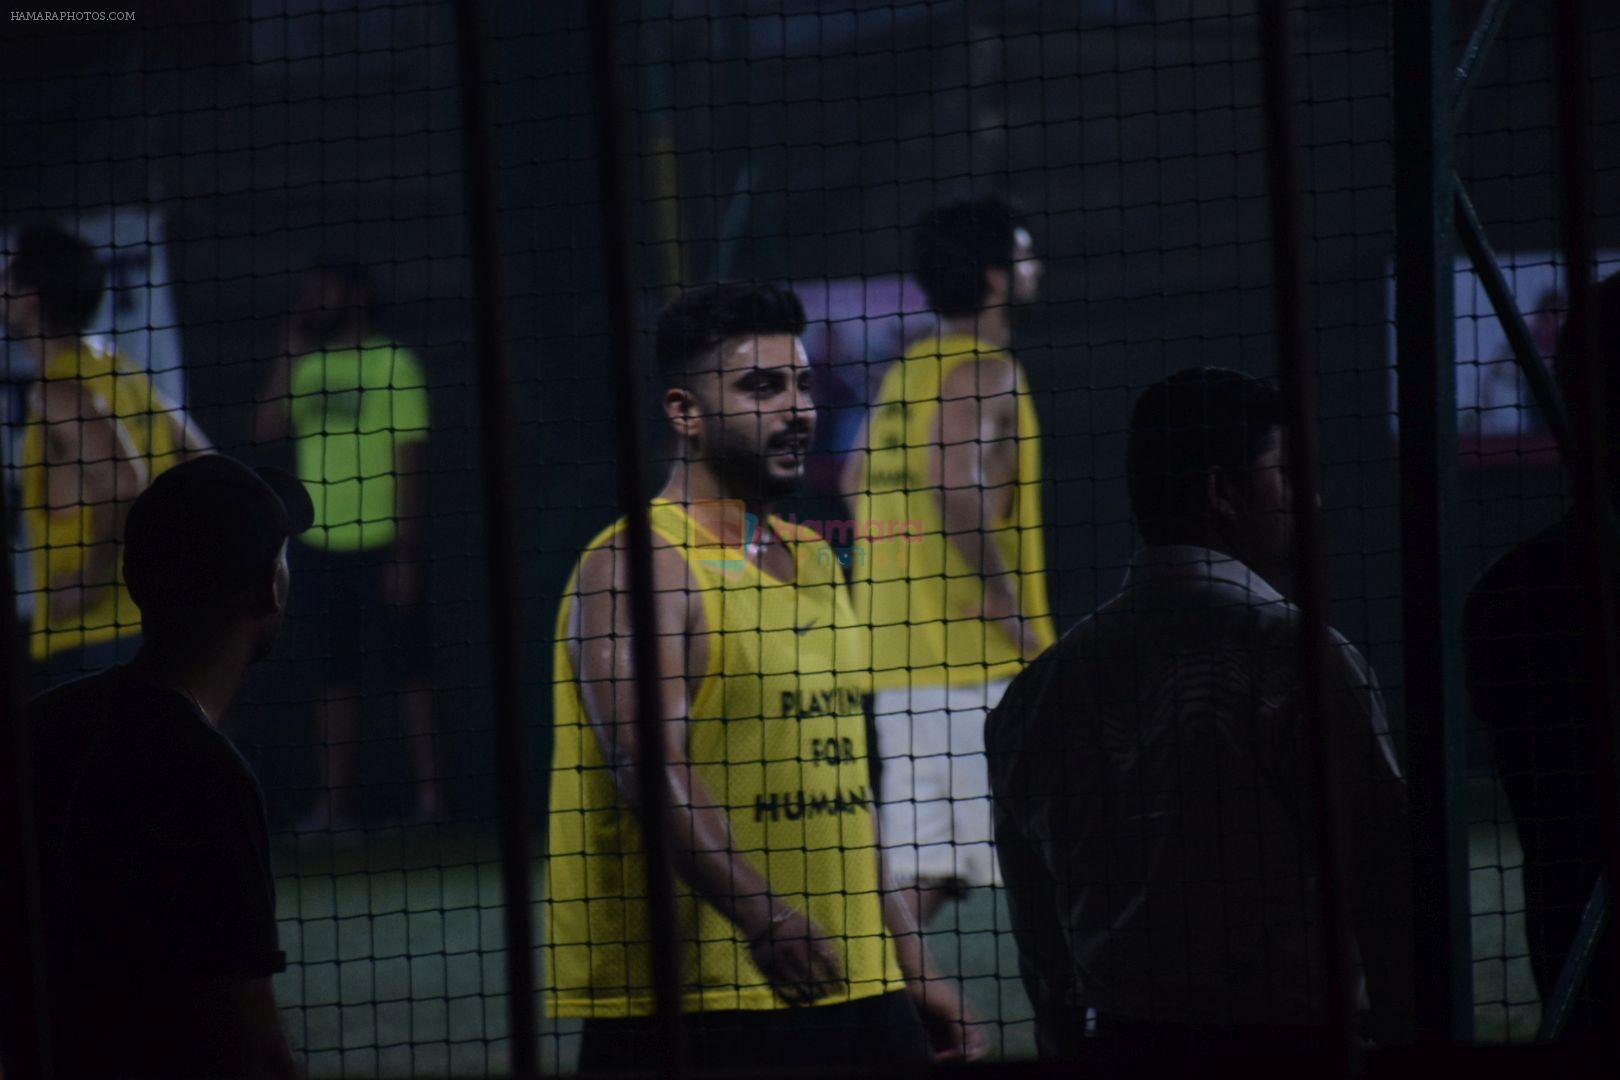 Arjun Kapoor playing football match at juhu in mumbai on 16th April 2018